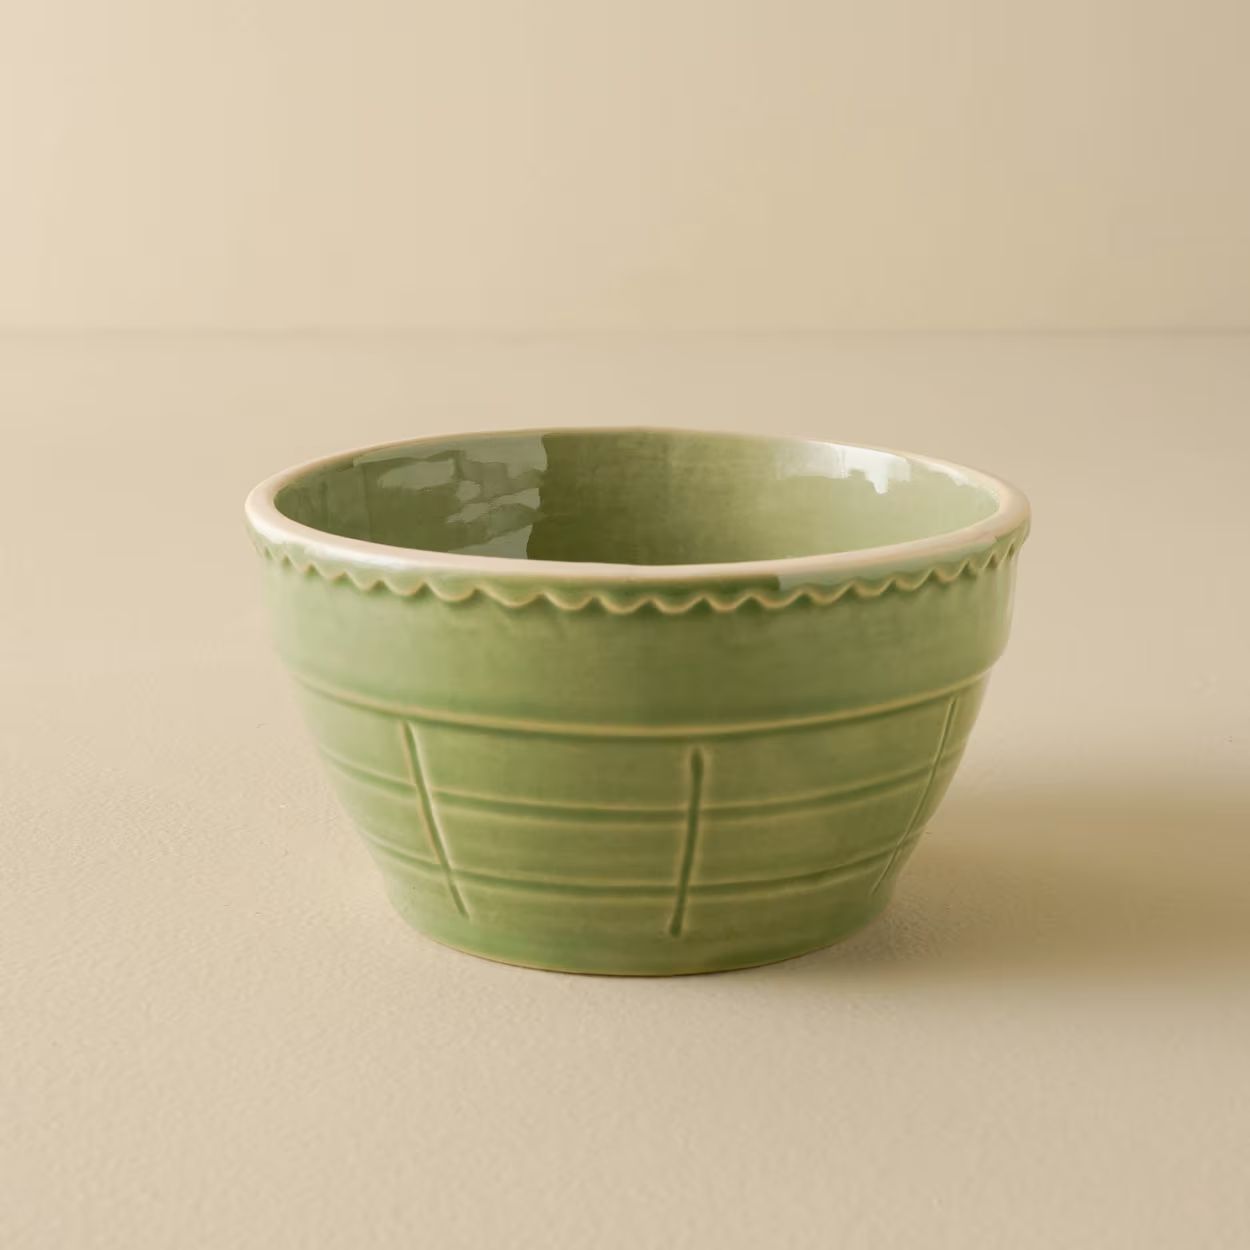 Vintage-Inspired Green Cereal Bowl | Magnolia